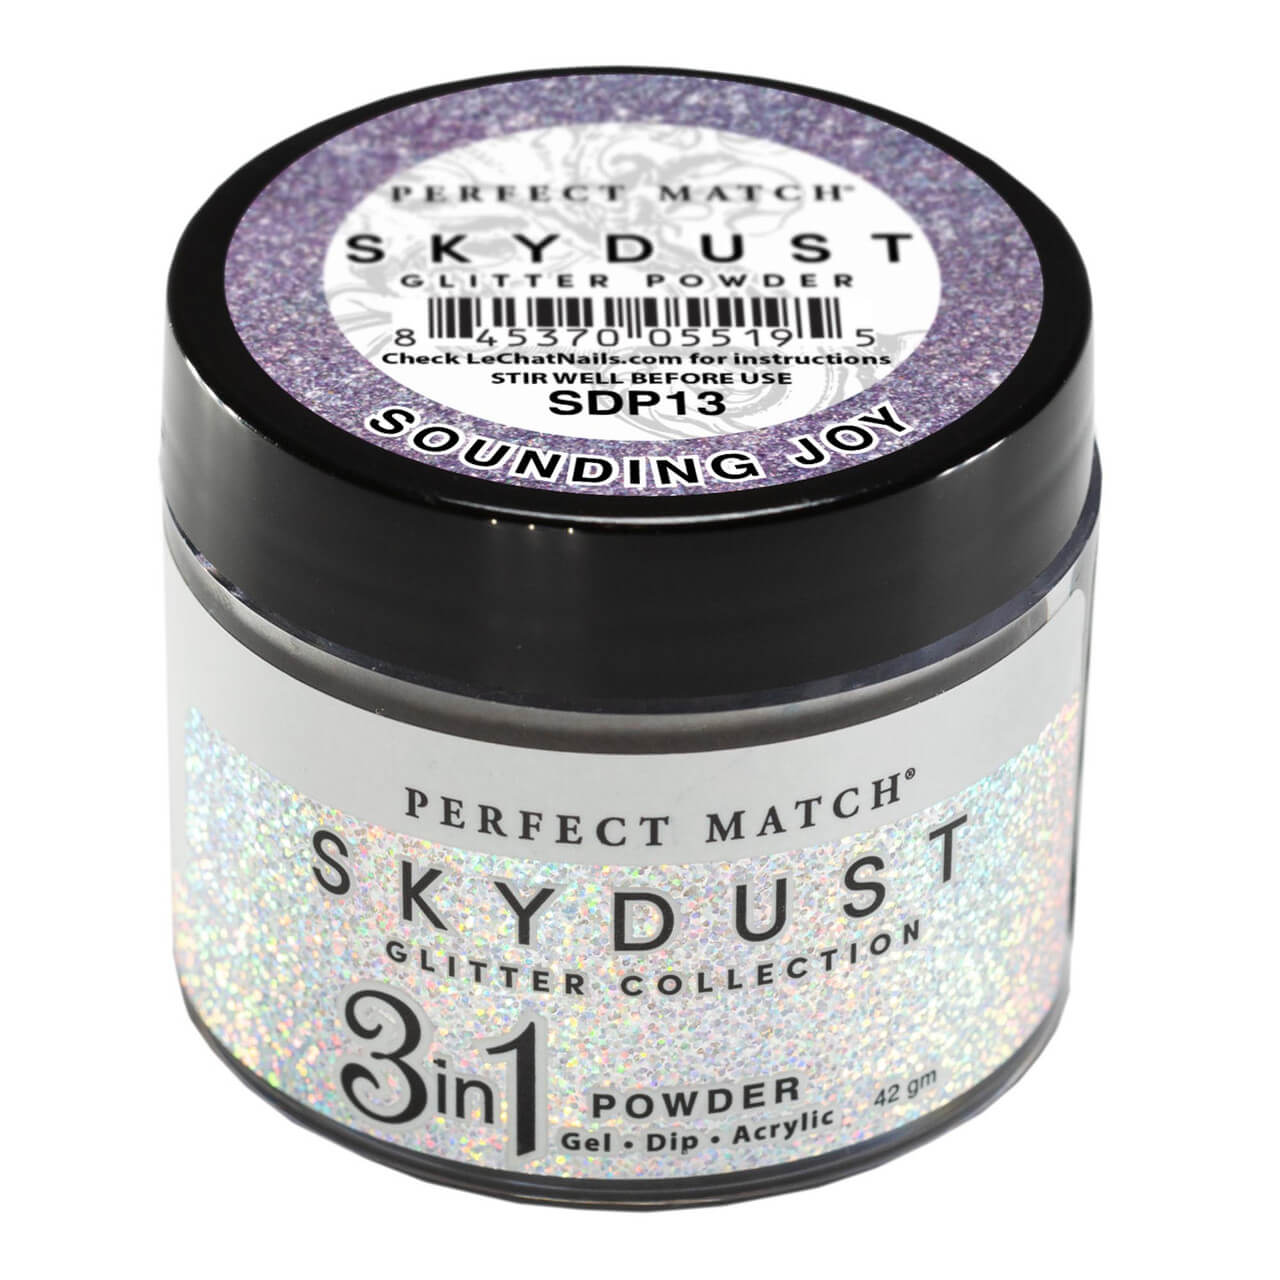 LeChat Perfect Sky Dust Glitter Powder - Sounding Joy 1.48 oz - #SDP13 - Premier Nail Supply 